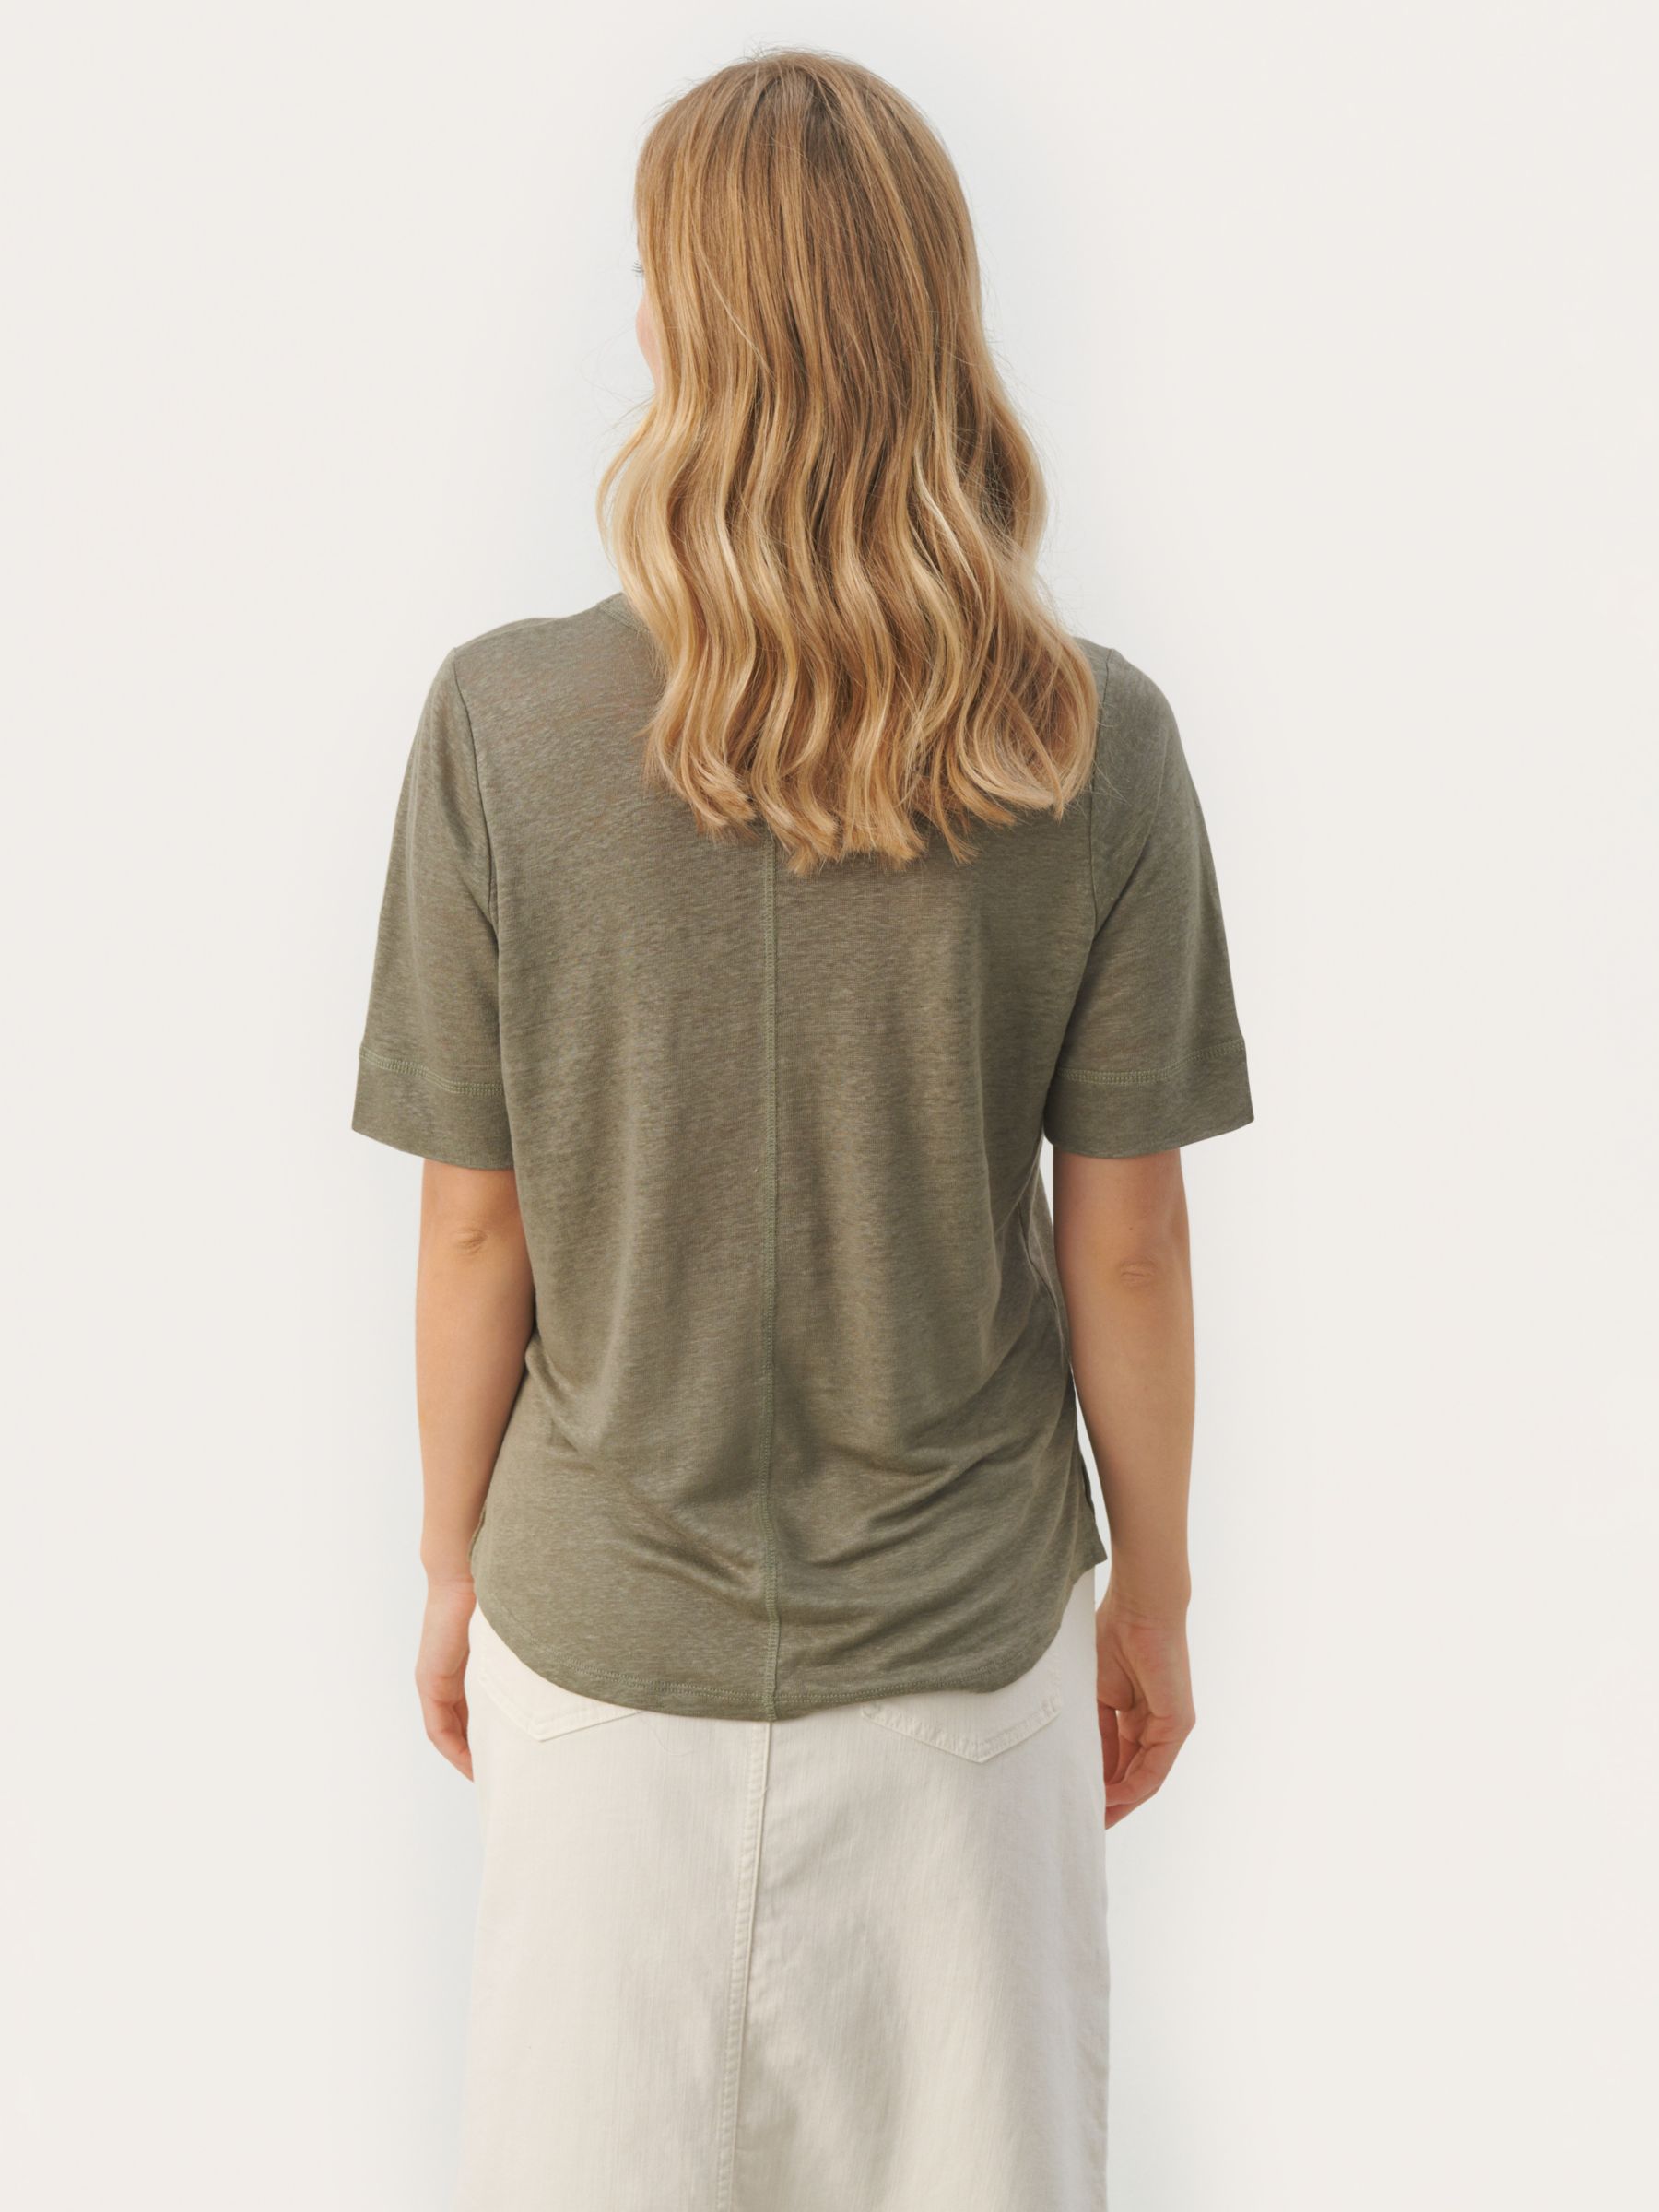 Buy Part Two Curlies Linen V-Neck T-Shirt Online at johnlewis.com